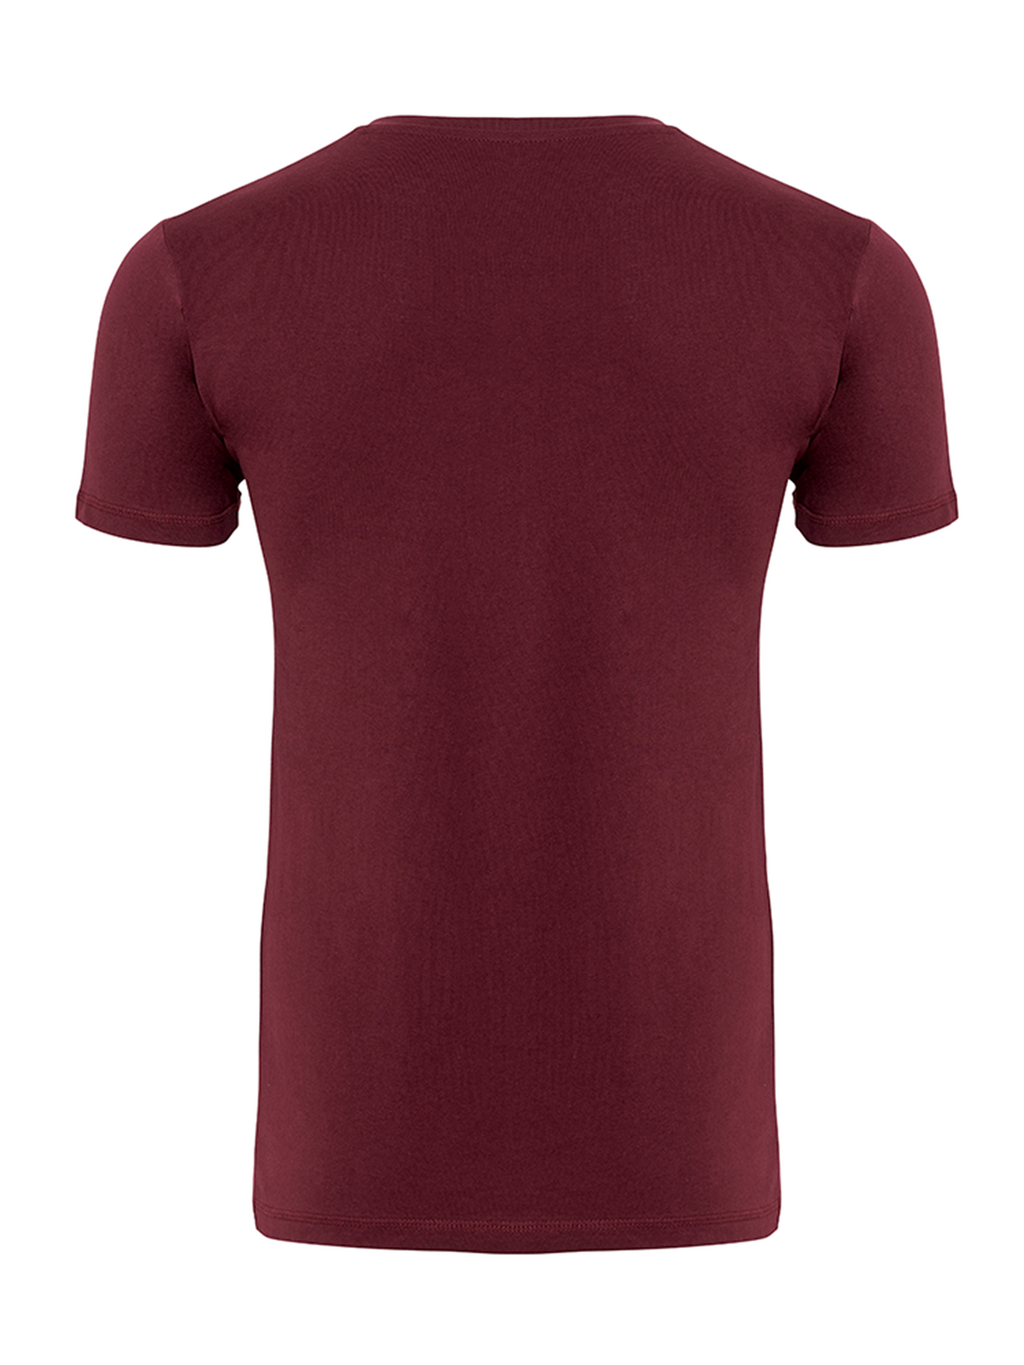 Muscle T-shirt - Burgundy